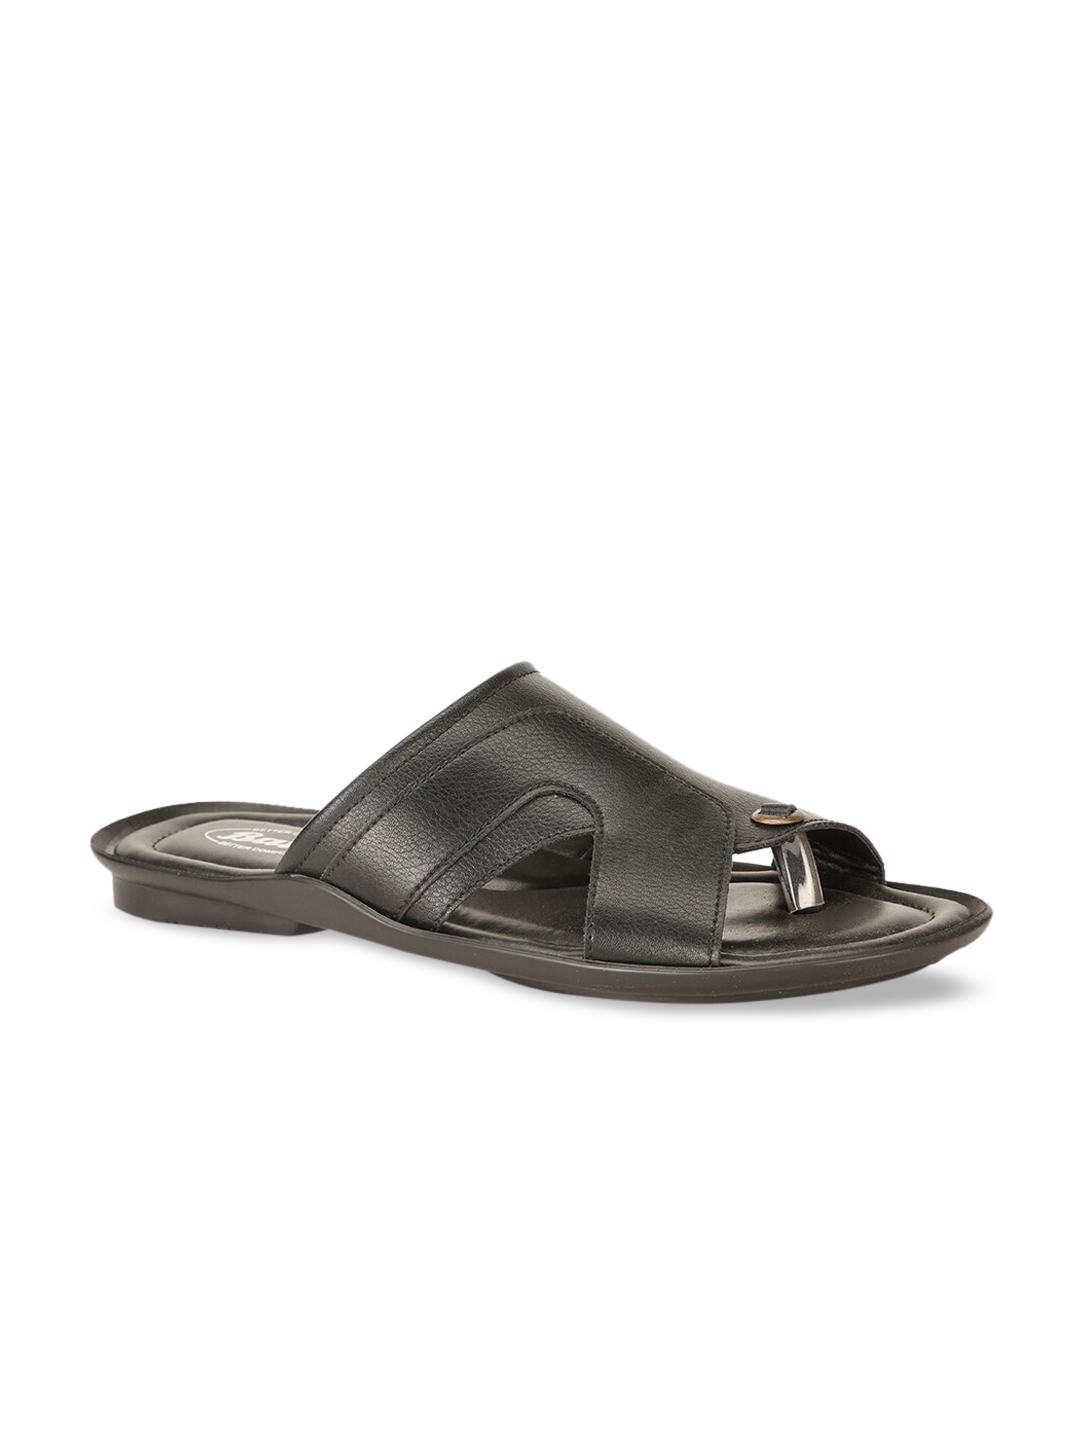 Buy Bata Men Black Comfort Sandals - Sandals for Men 12421032 | Myntra